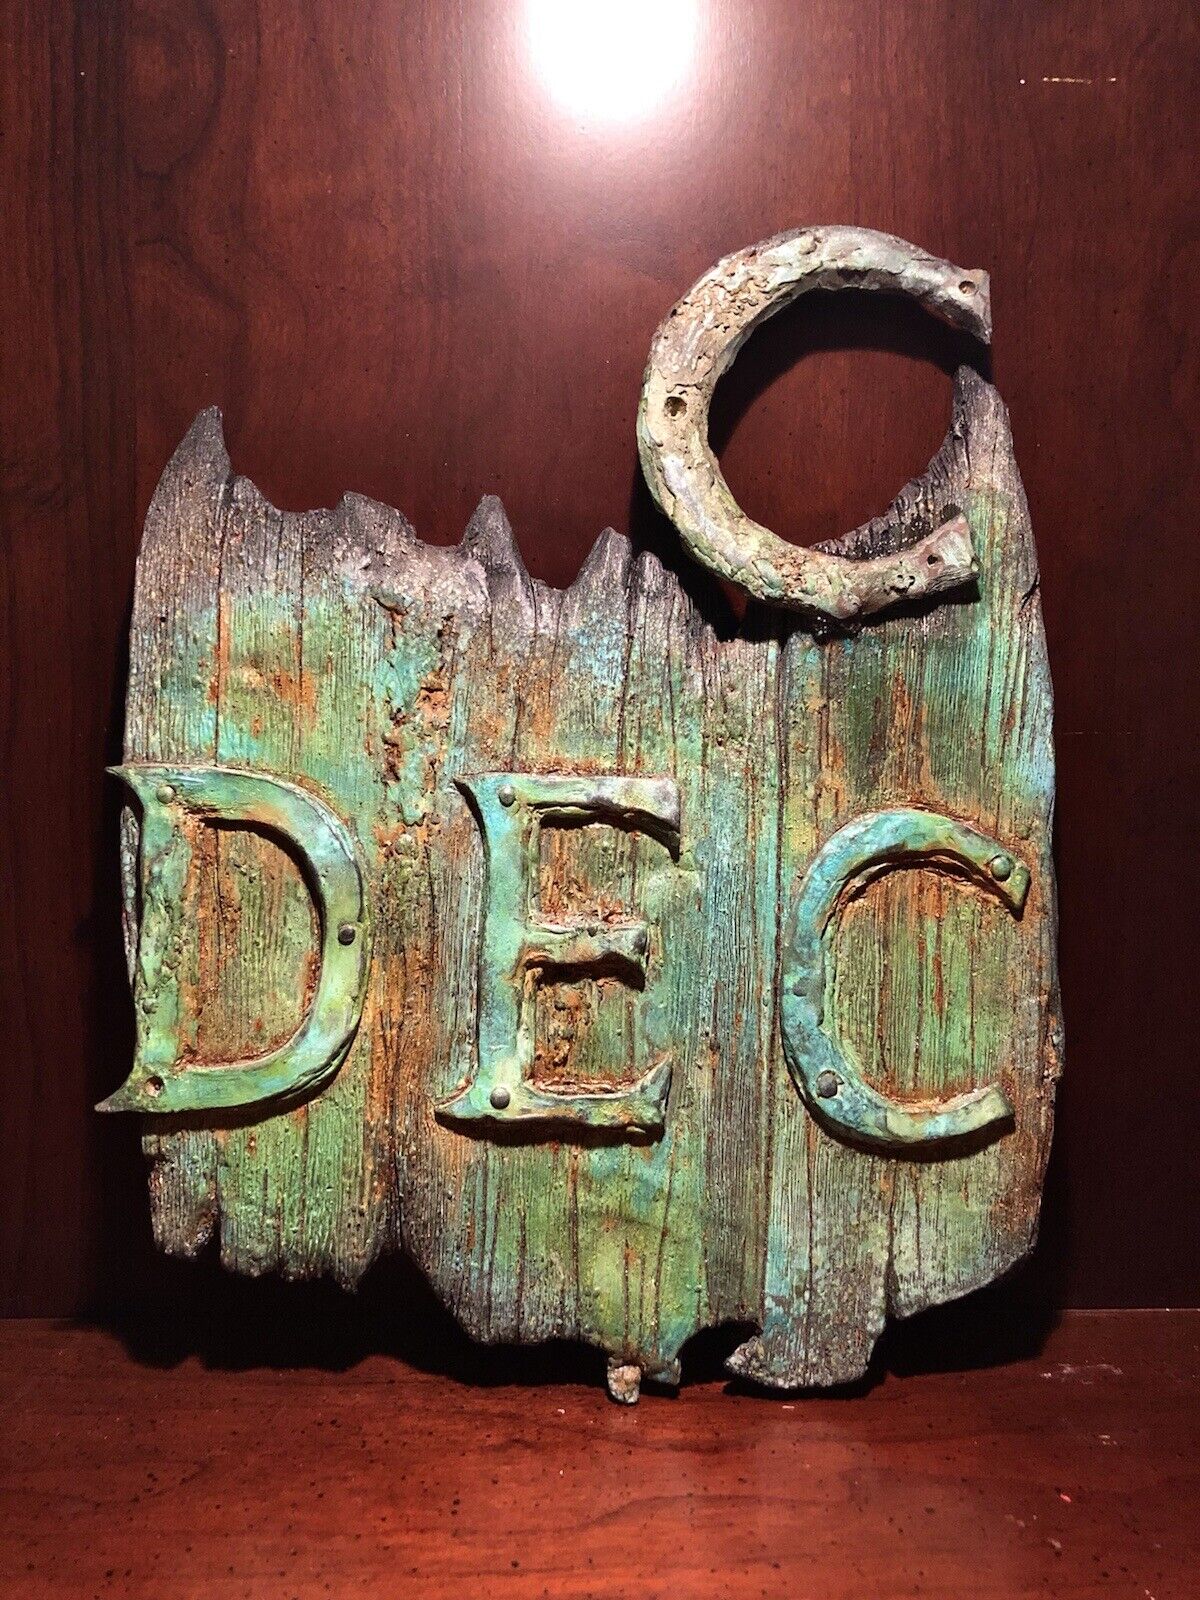 RMS Titanic “C-dec” wreckage artifact replica